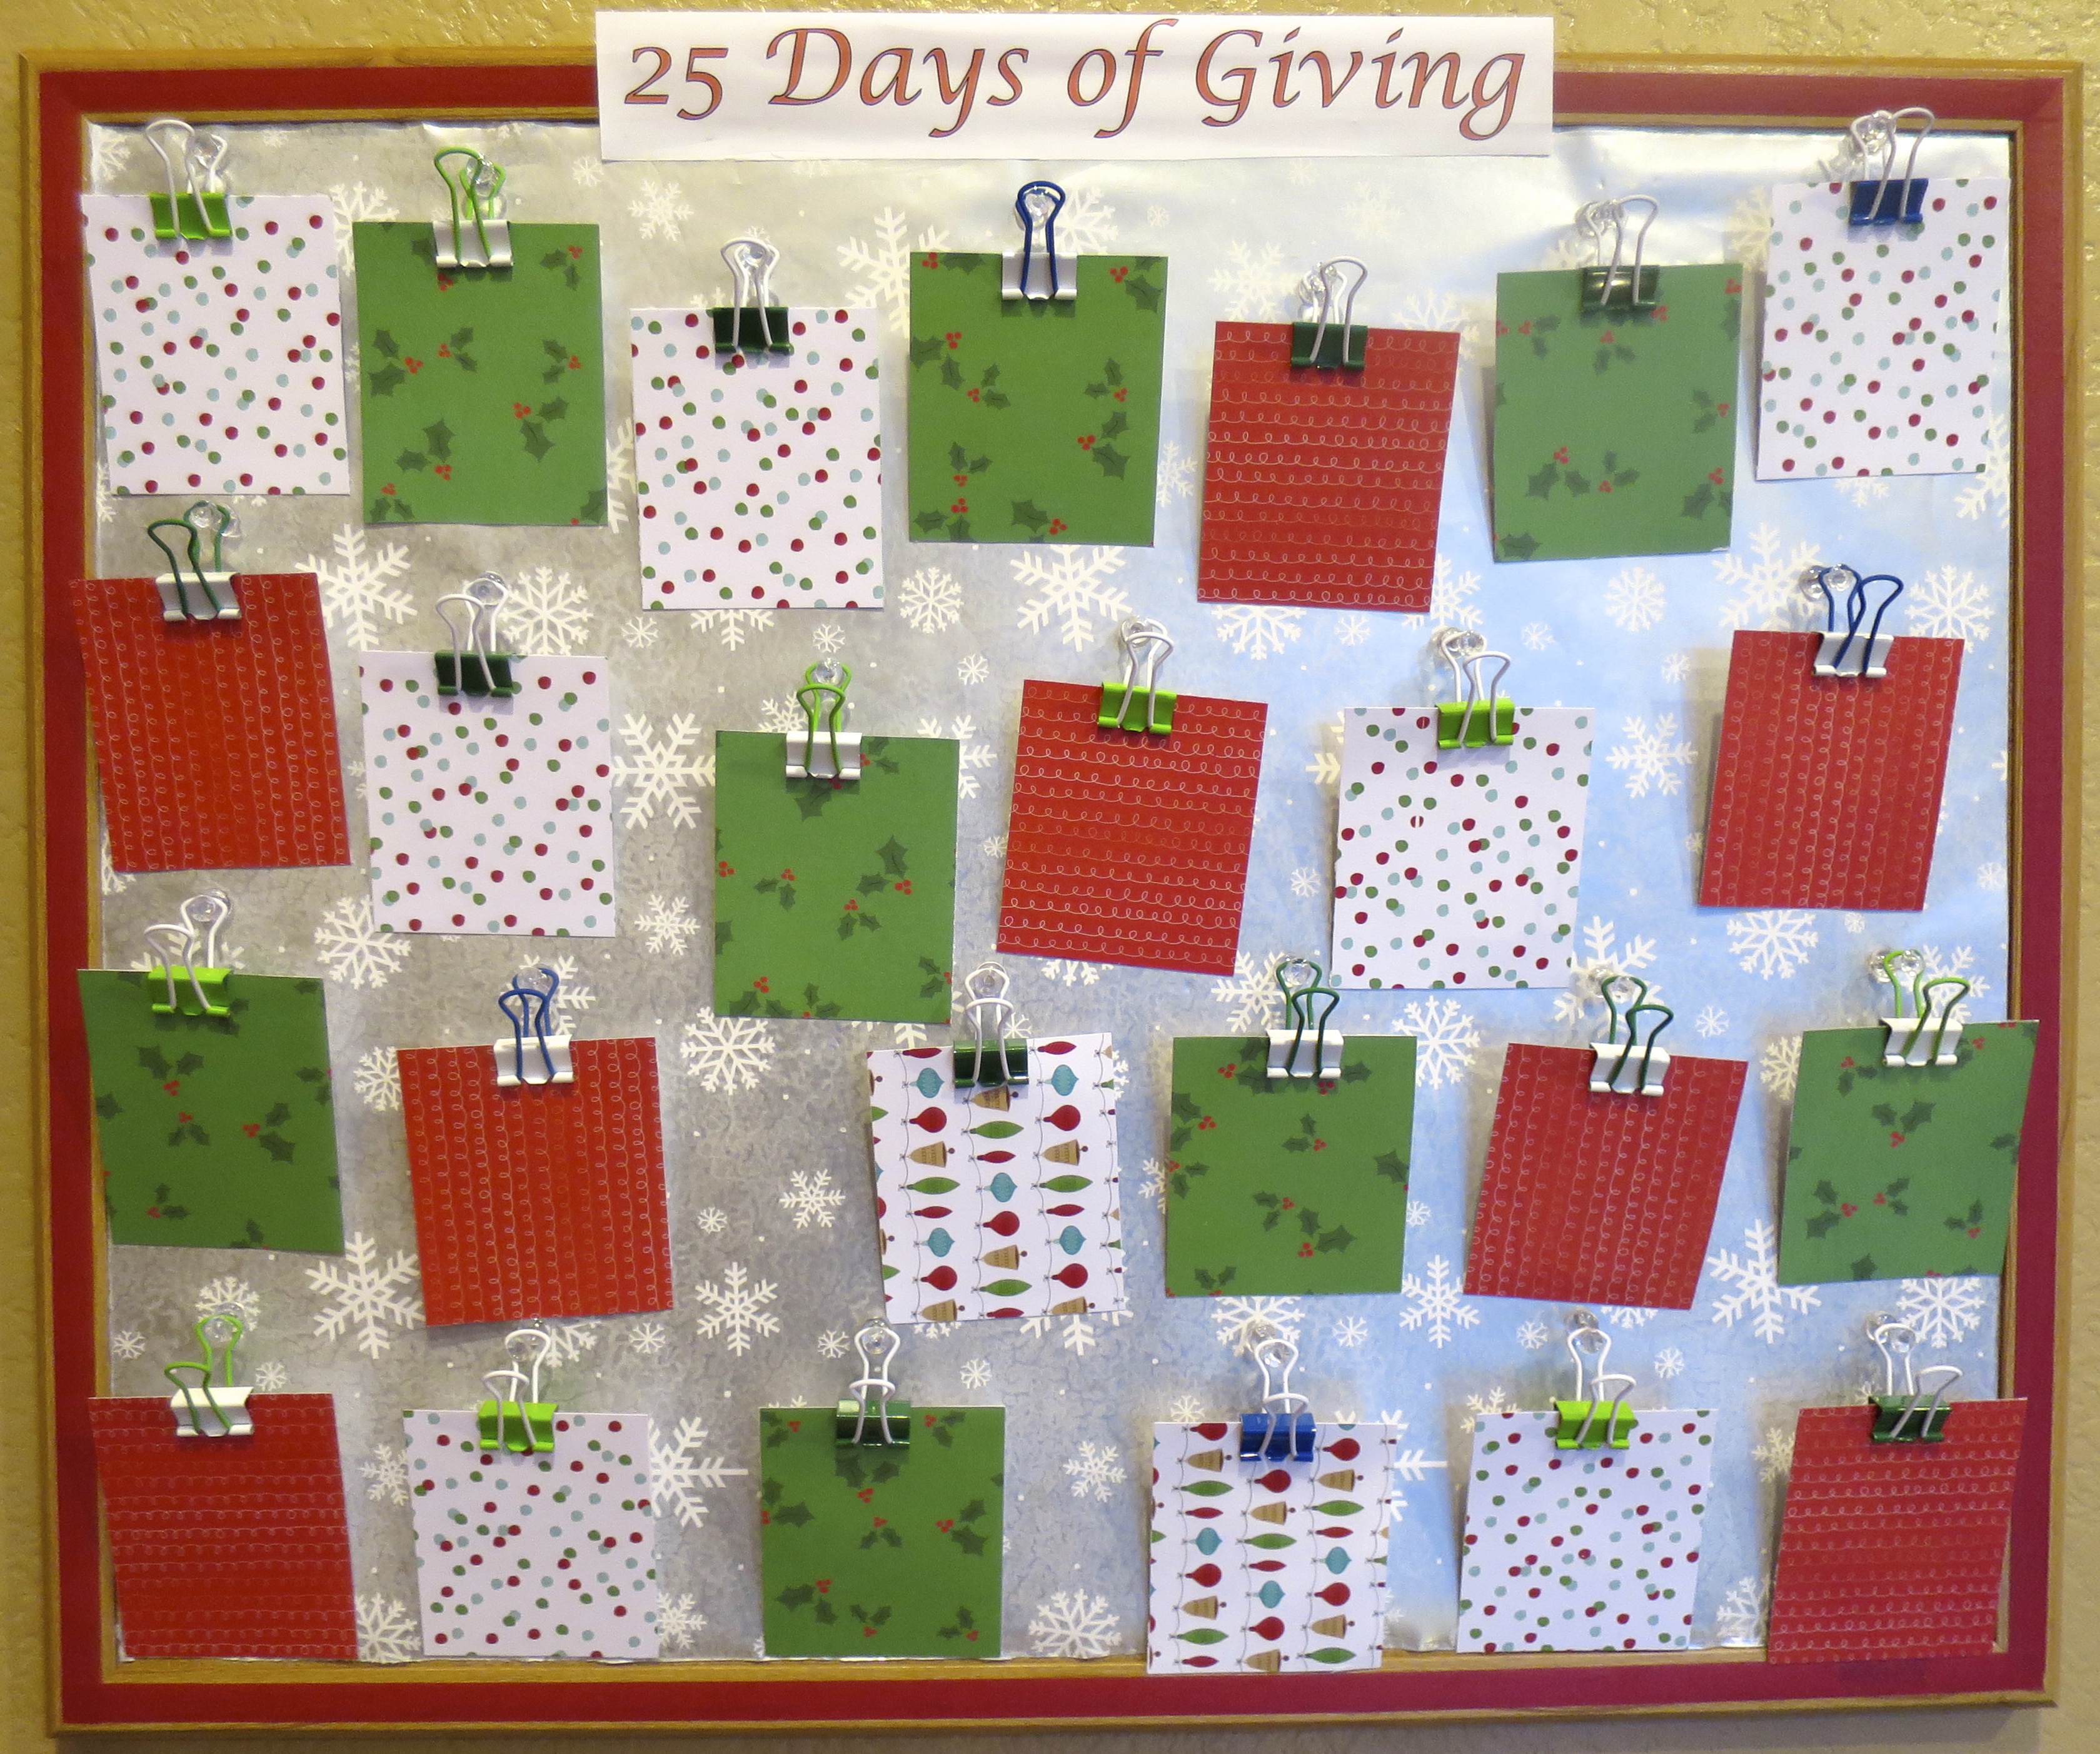 25 Days of Giving Calendar